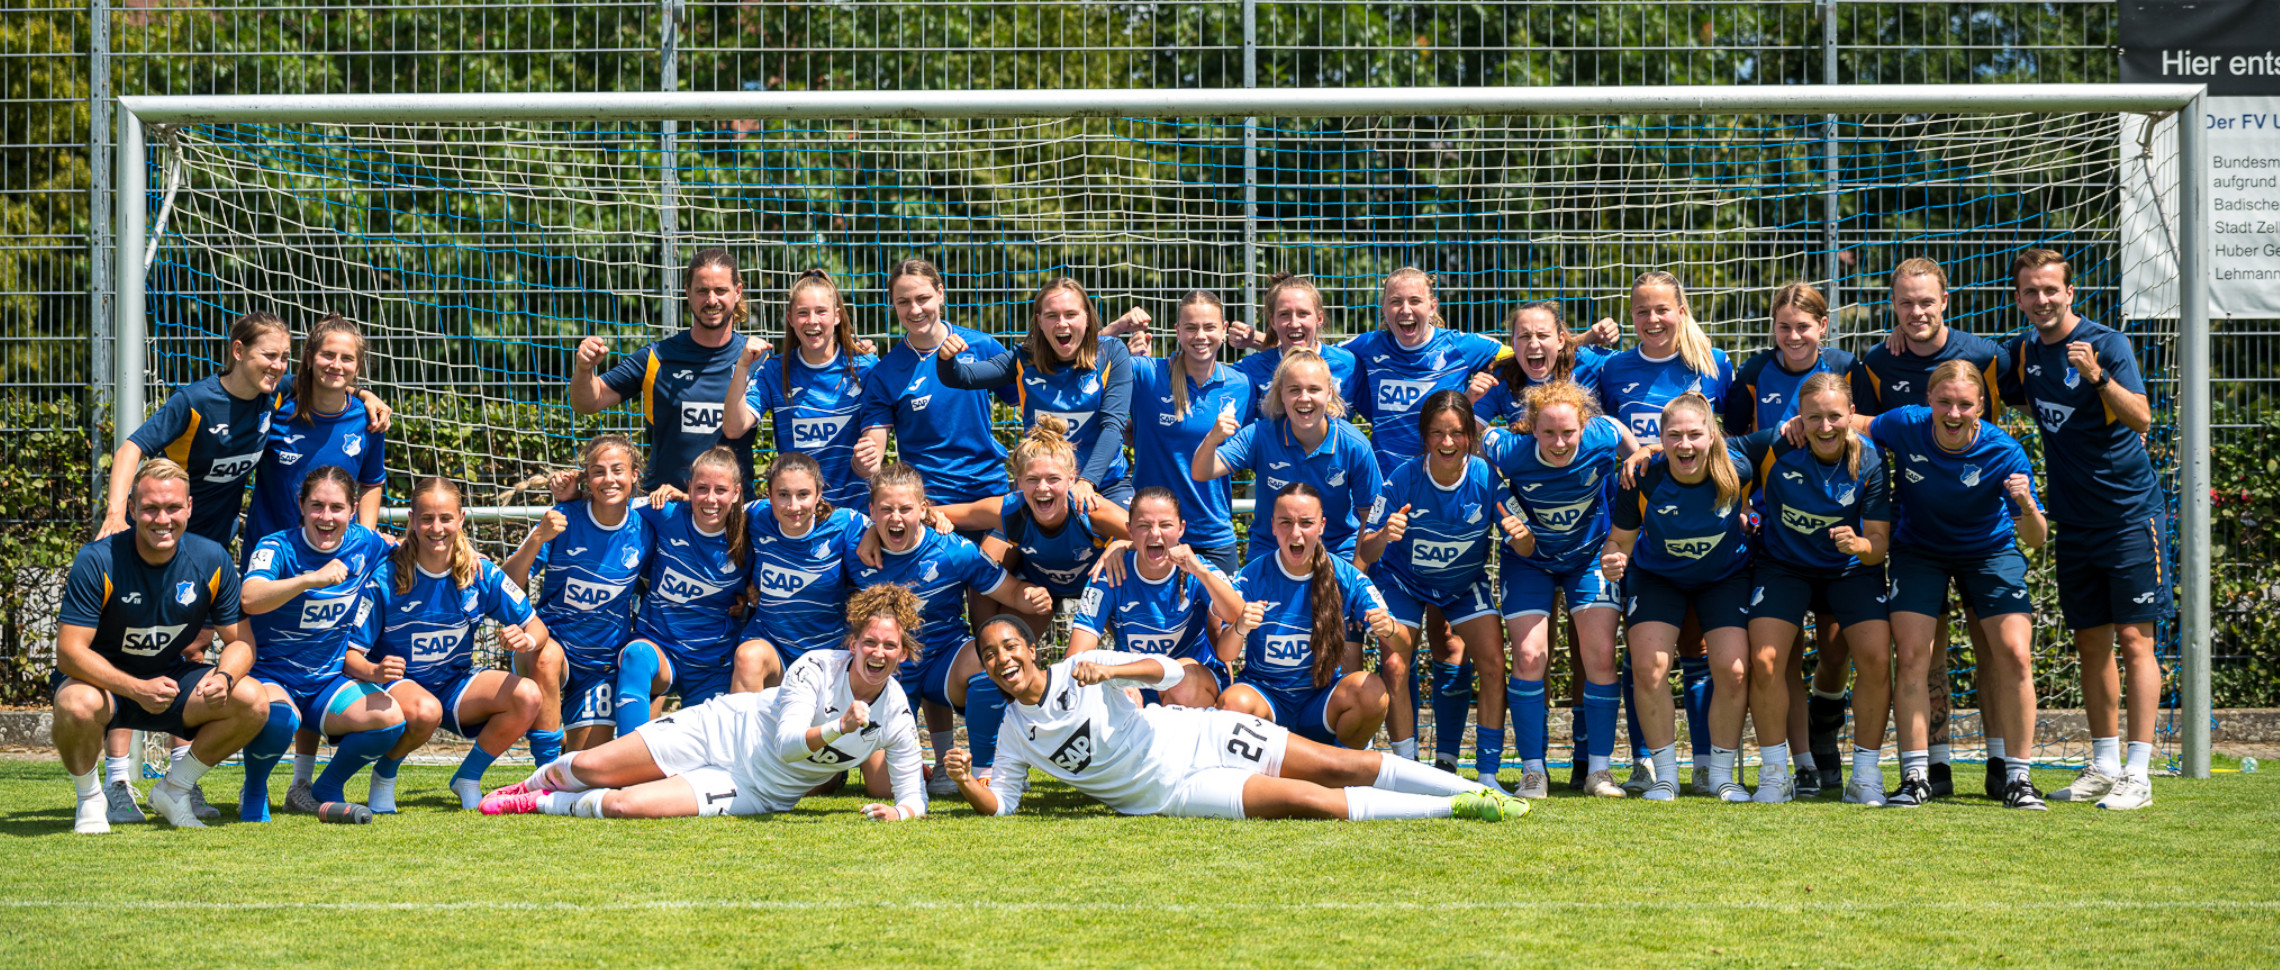 [Bild: 20230726-sap-Hoffenheim-Frauen-U20-Trainingslager.jpg]